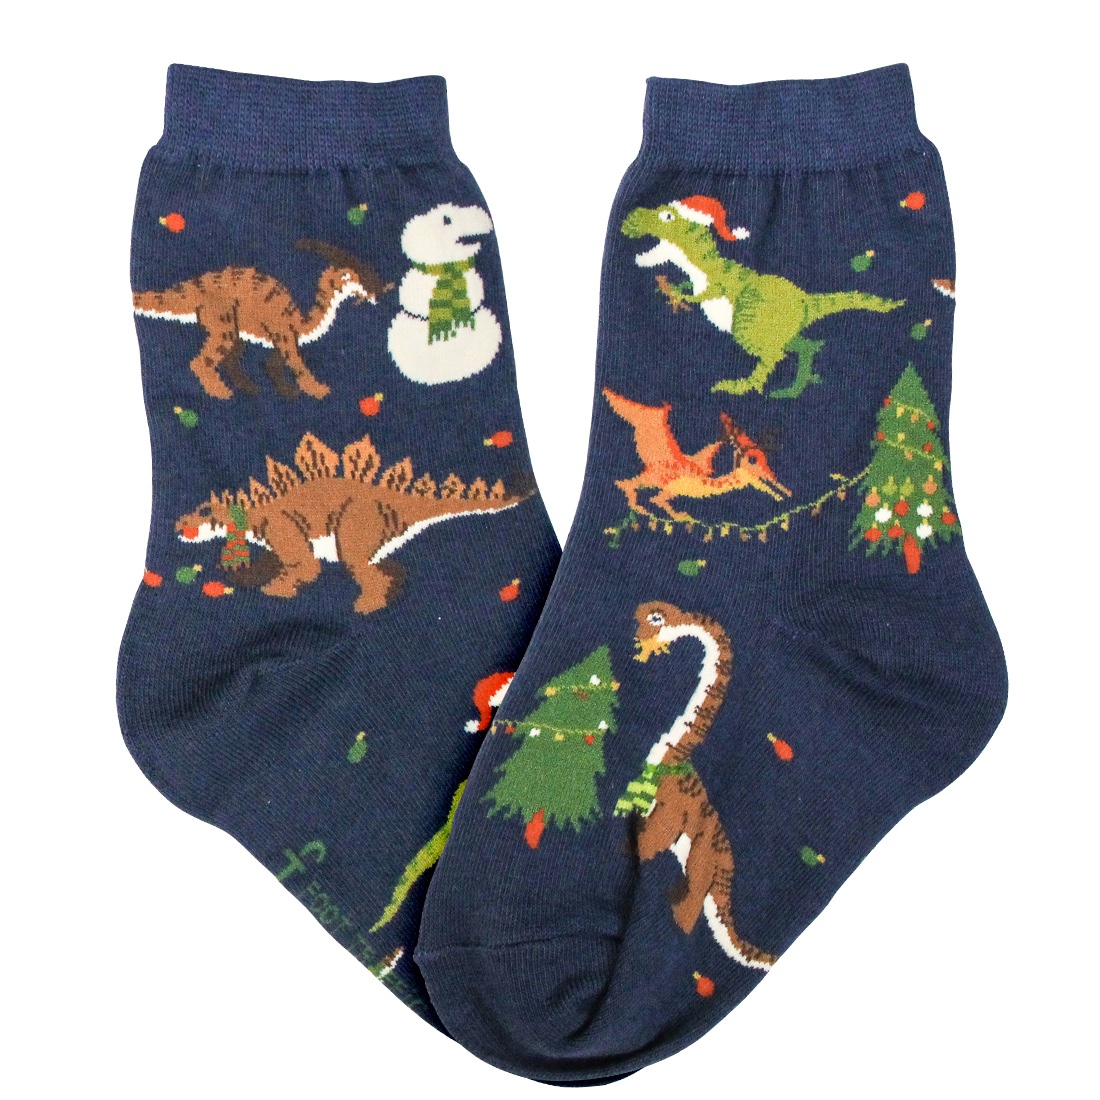 3 pairs Boys Novelty Camo Dinosaurs Cotton Socks Size 6-3 XMAS STOCKING FILLER 